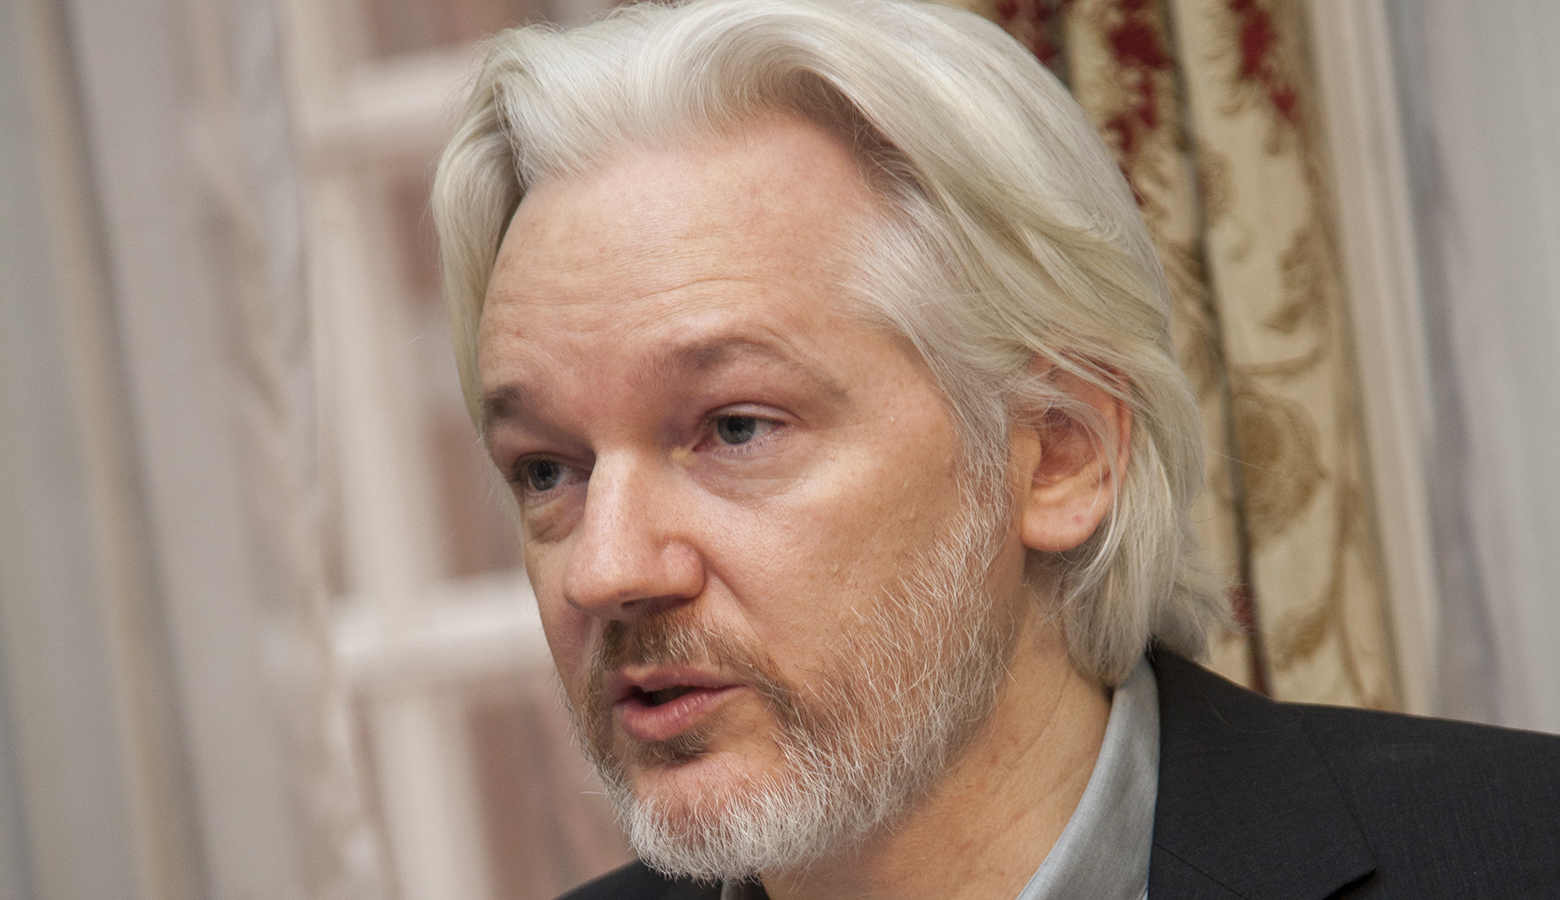 Julian Assange e o caso Wikileaks podem mudar o jornalismo no mundo